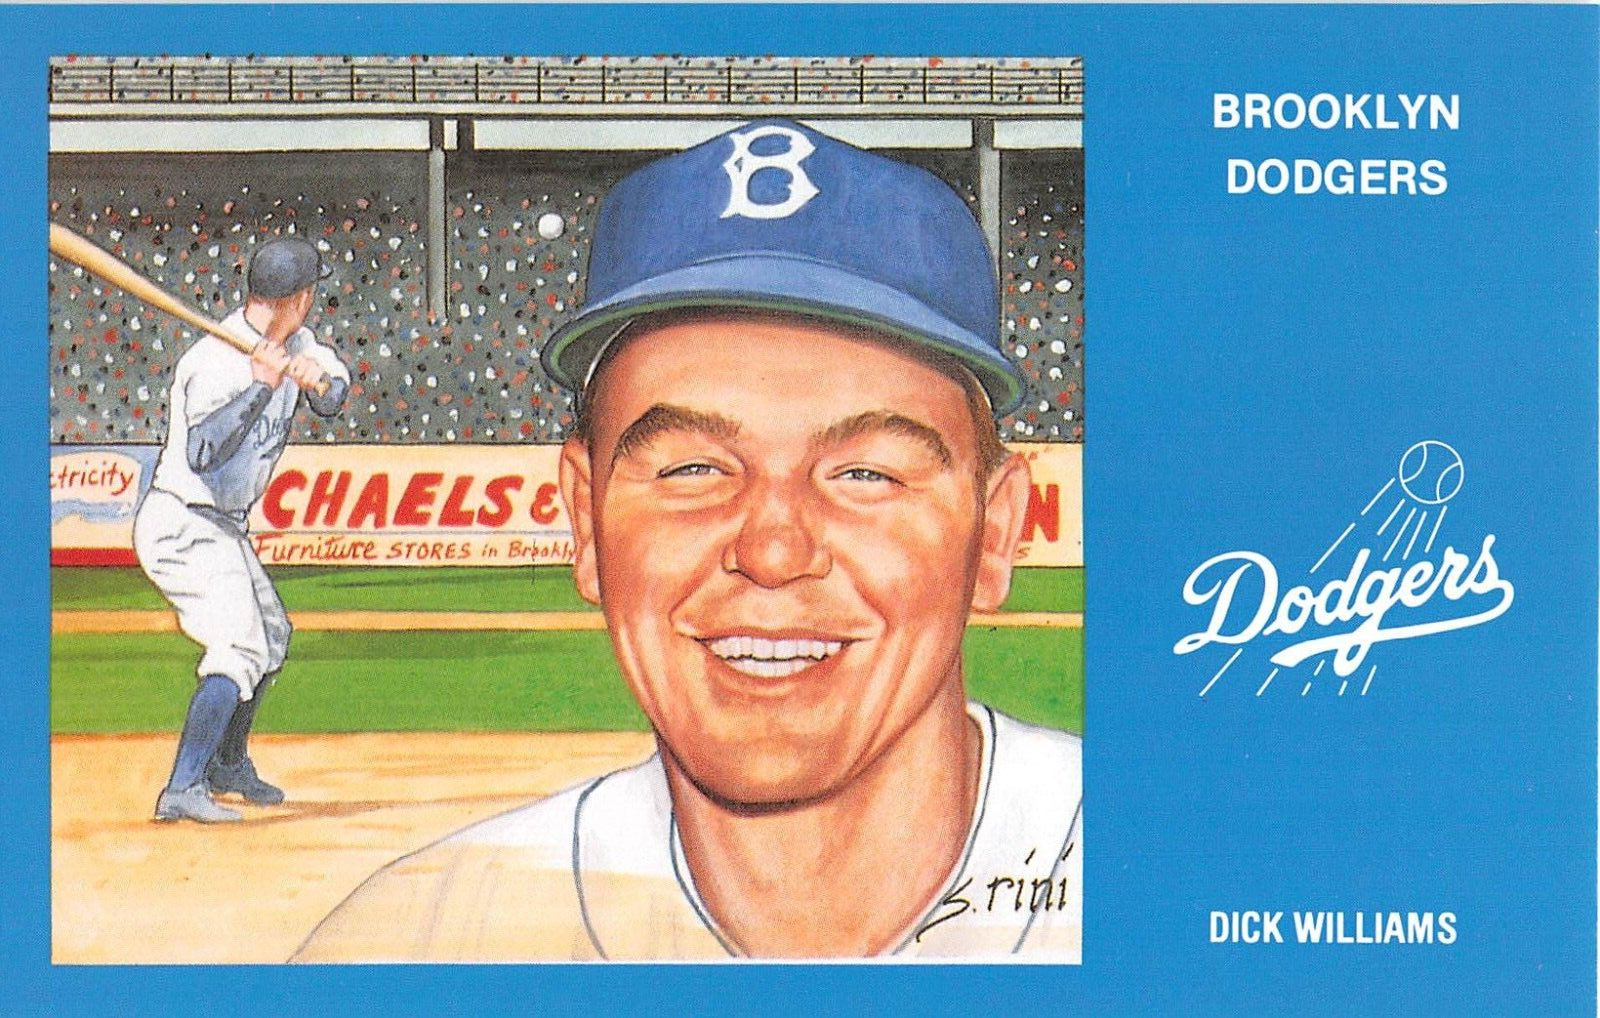 1991 Dick Williams Brooklyn Dodgers post card Baseball